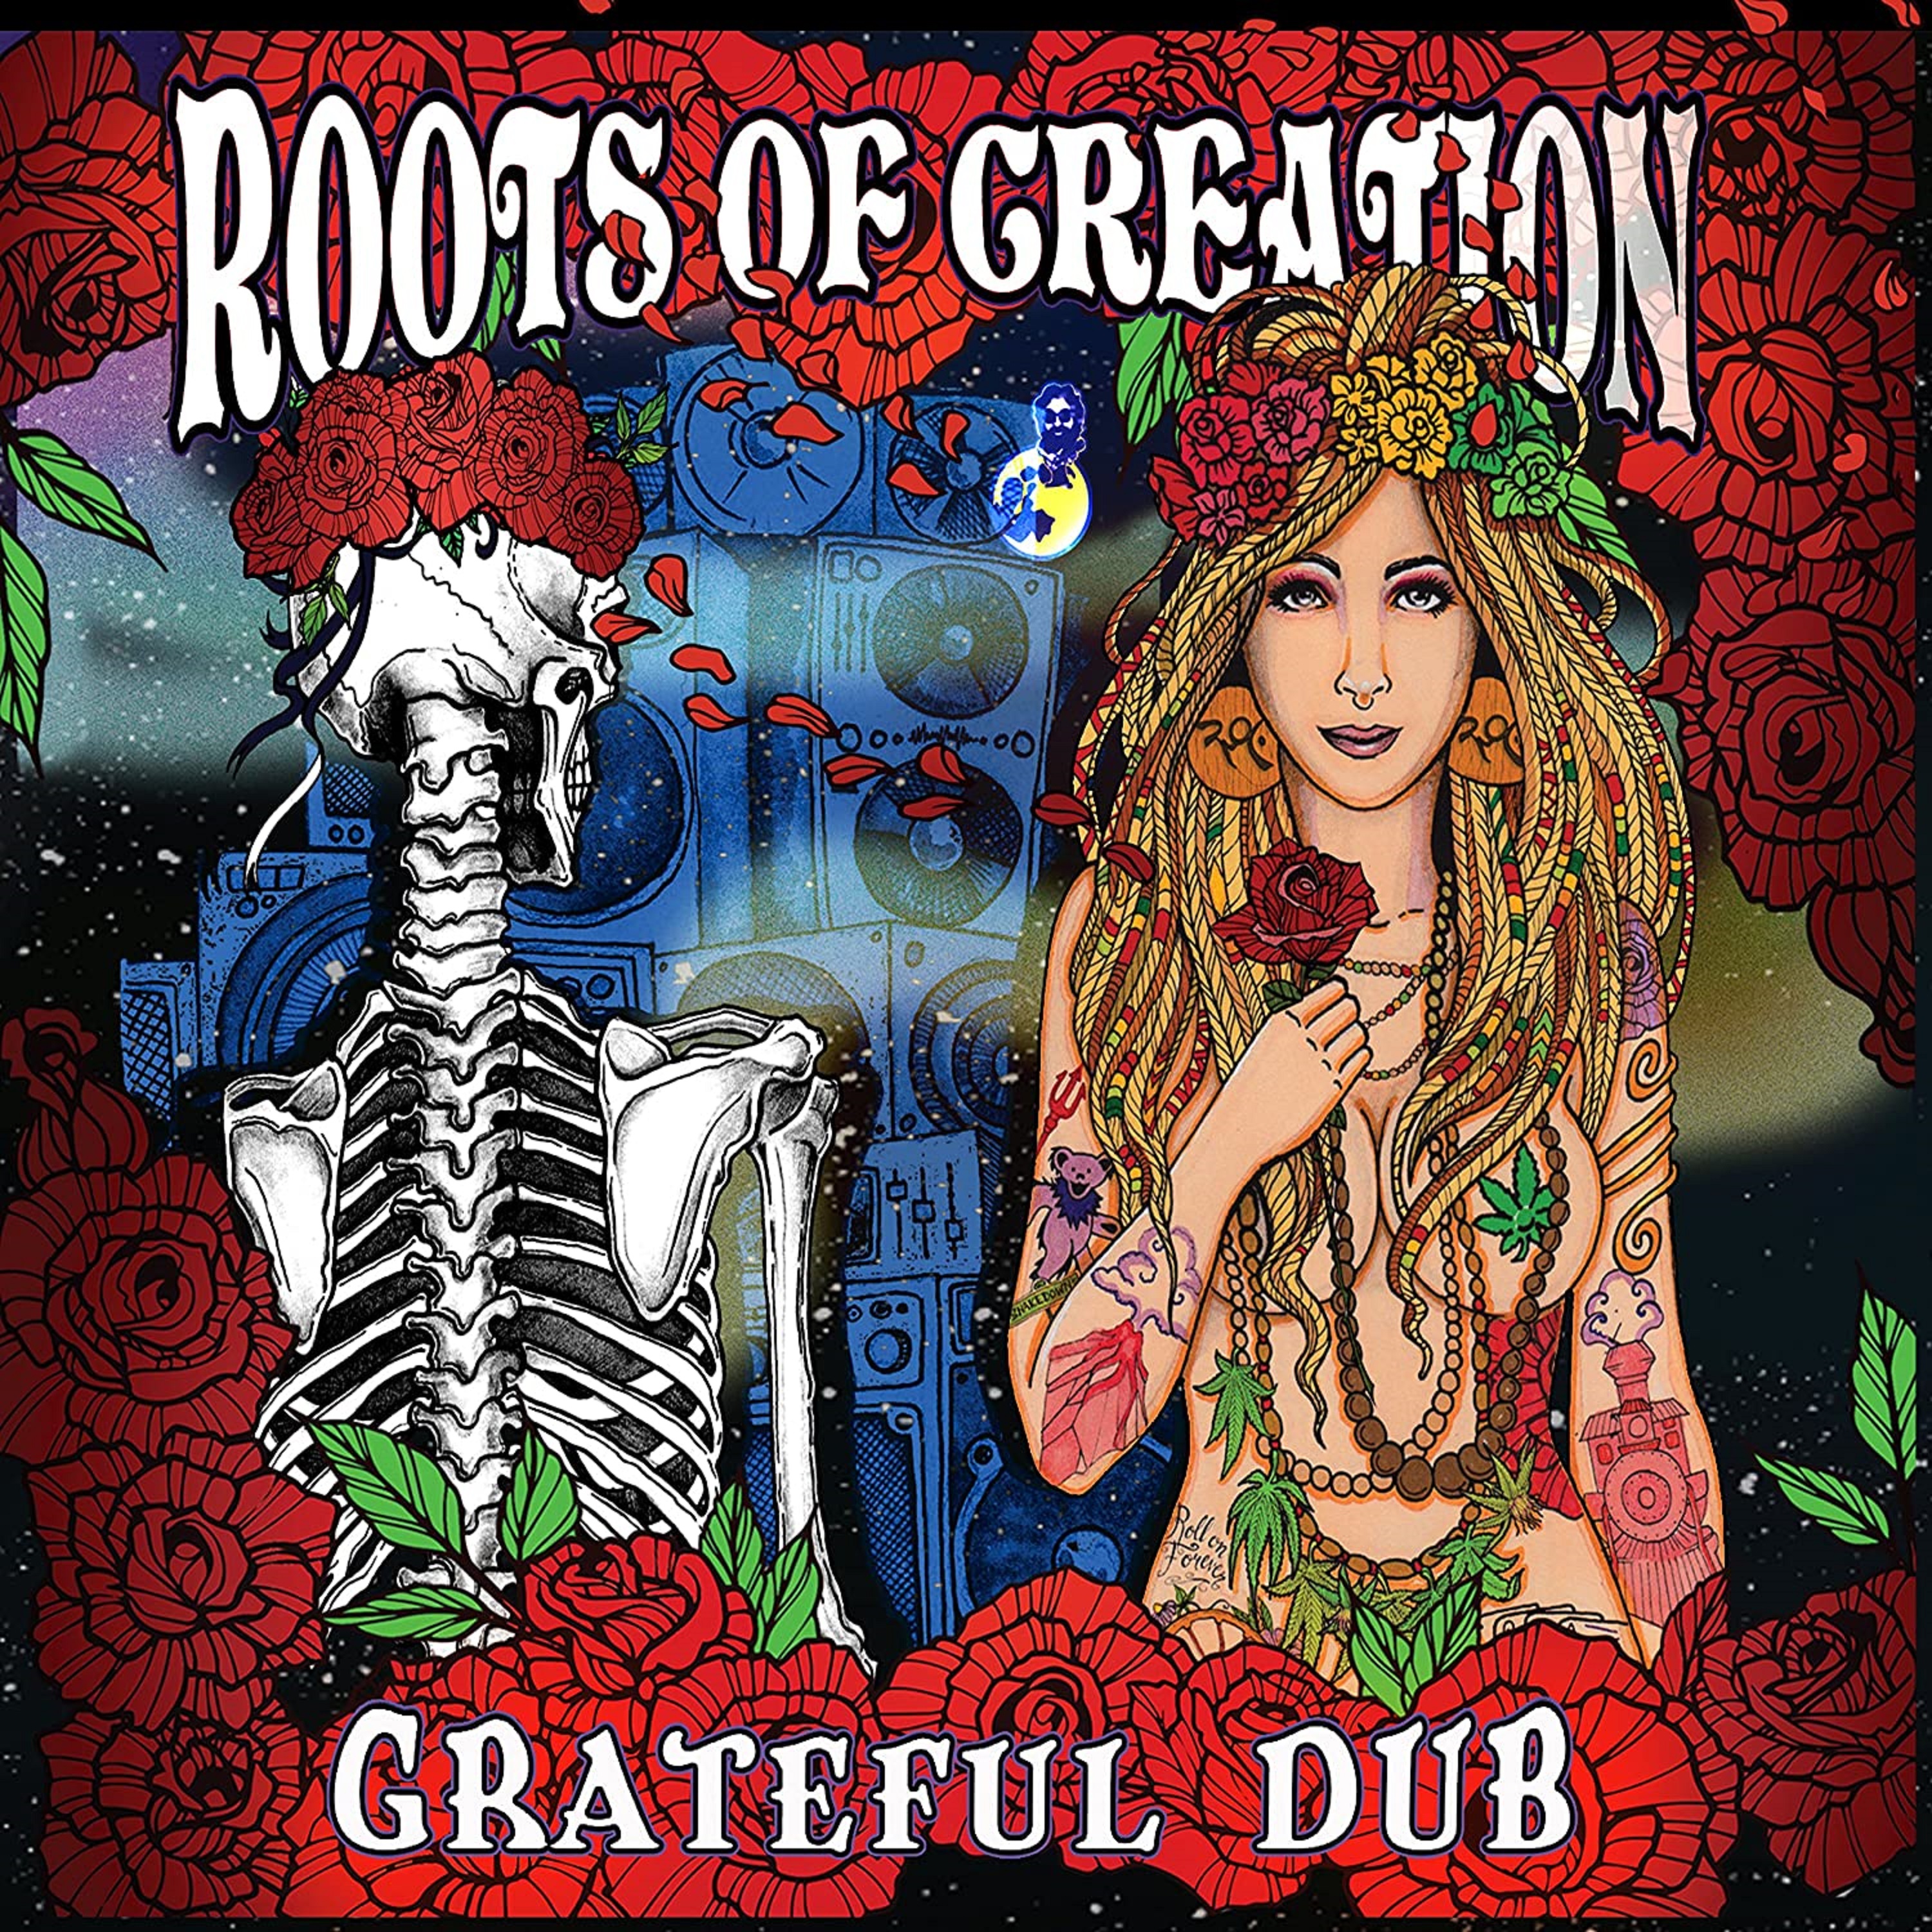 Grateful Dead Revival "Casey Jones" from Reggae Band Roots of Creation & Dan Kelly